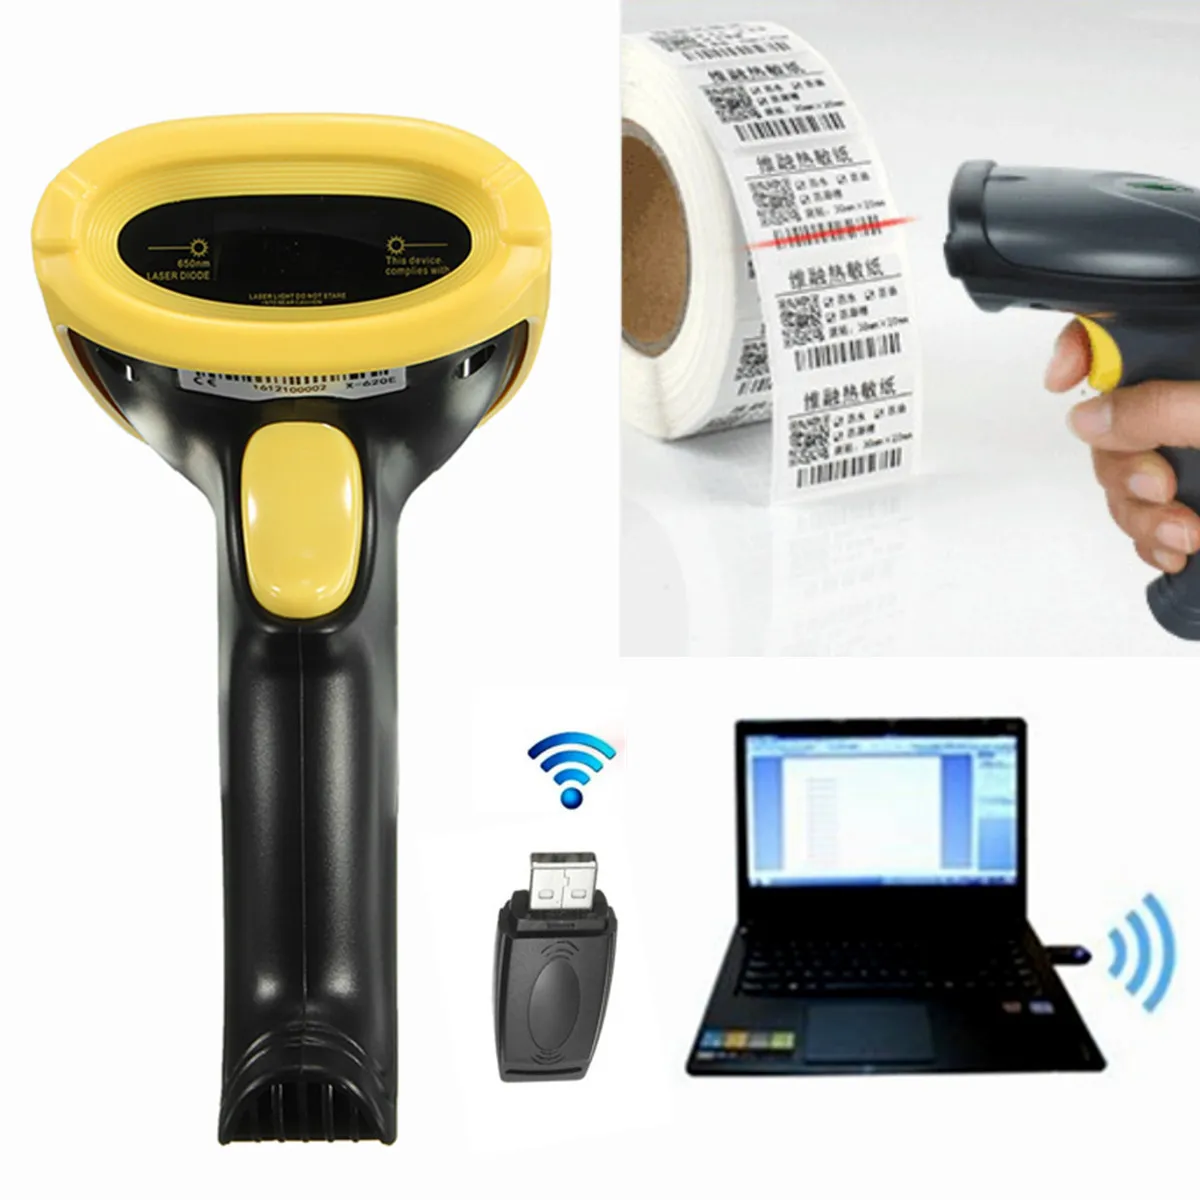 

2.4GHz Portable Barcode Scanner USB WIFI Handheld Visible Wireless Laser Cordless Barcode Reader For Supermarket Shop